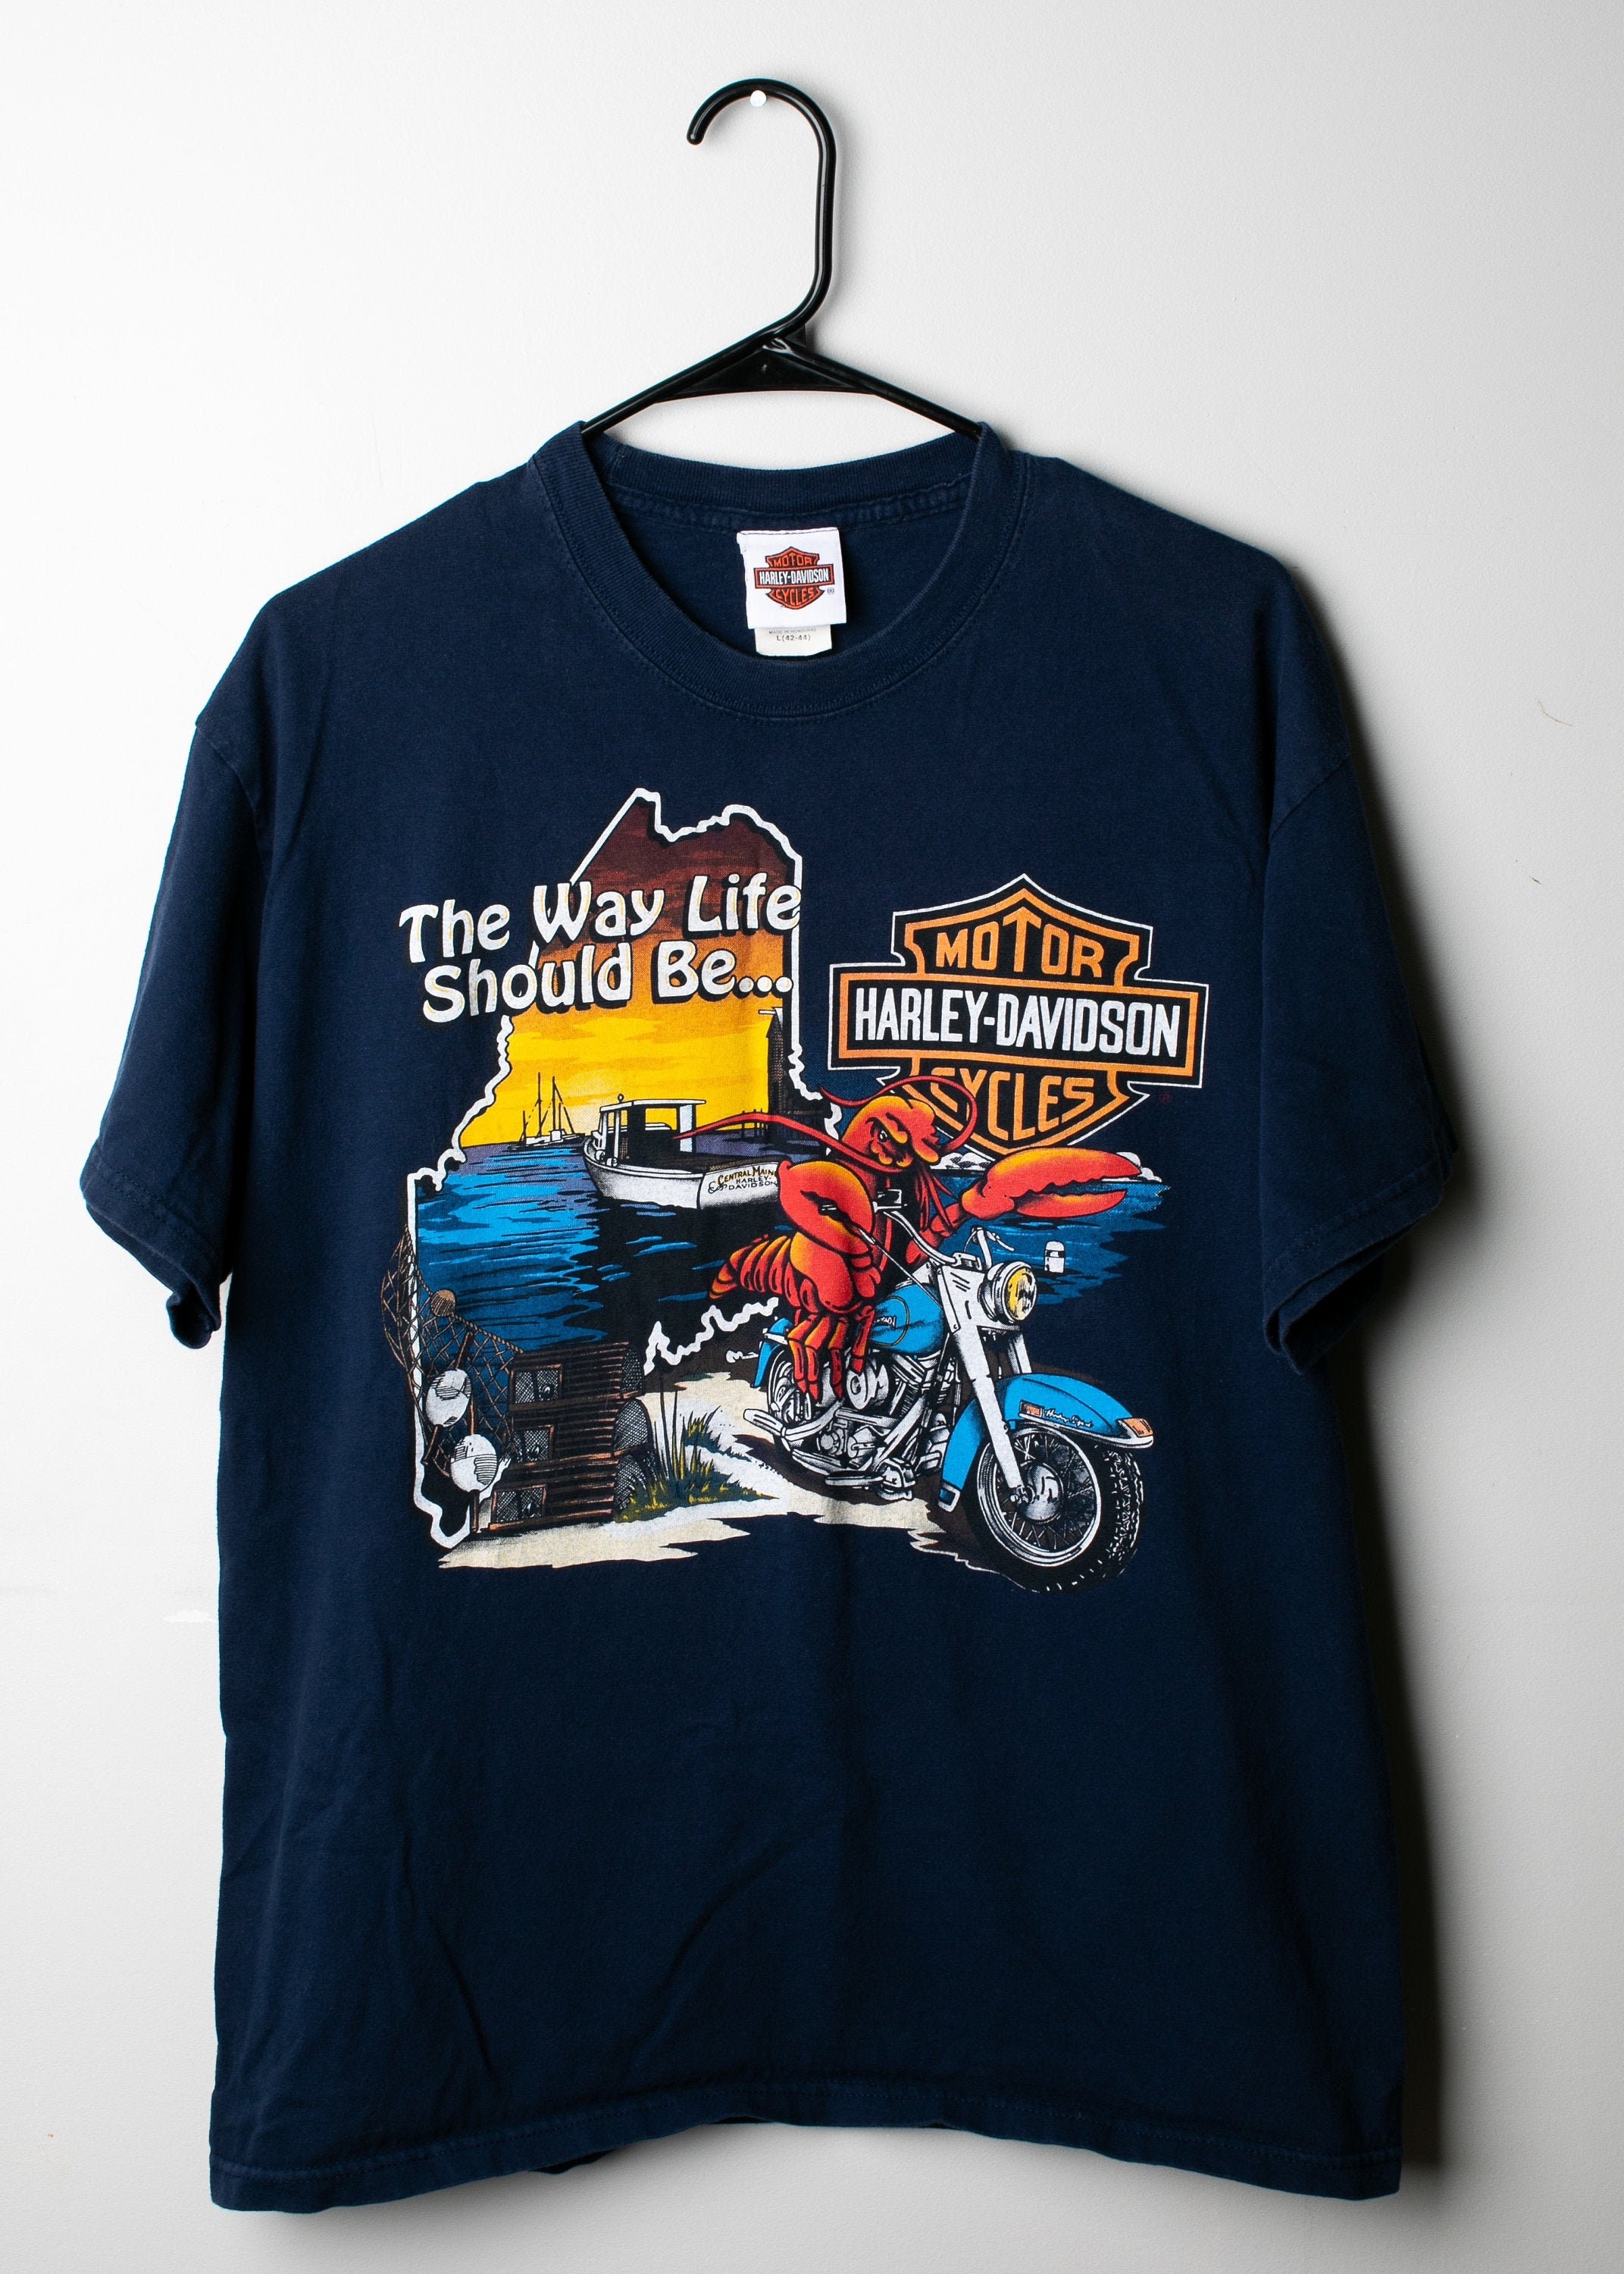 VTG Harley Davidson the Way Life Should Be T-shirt L 